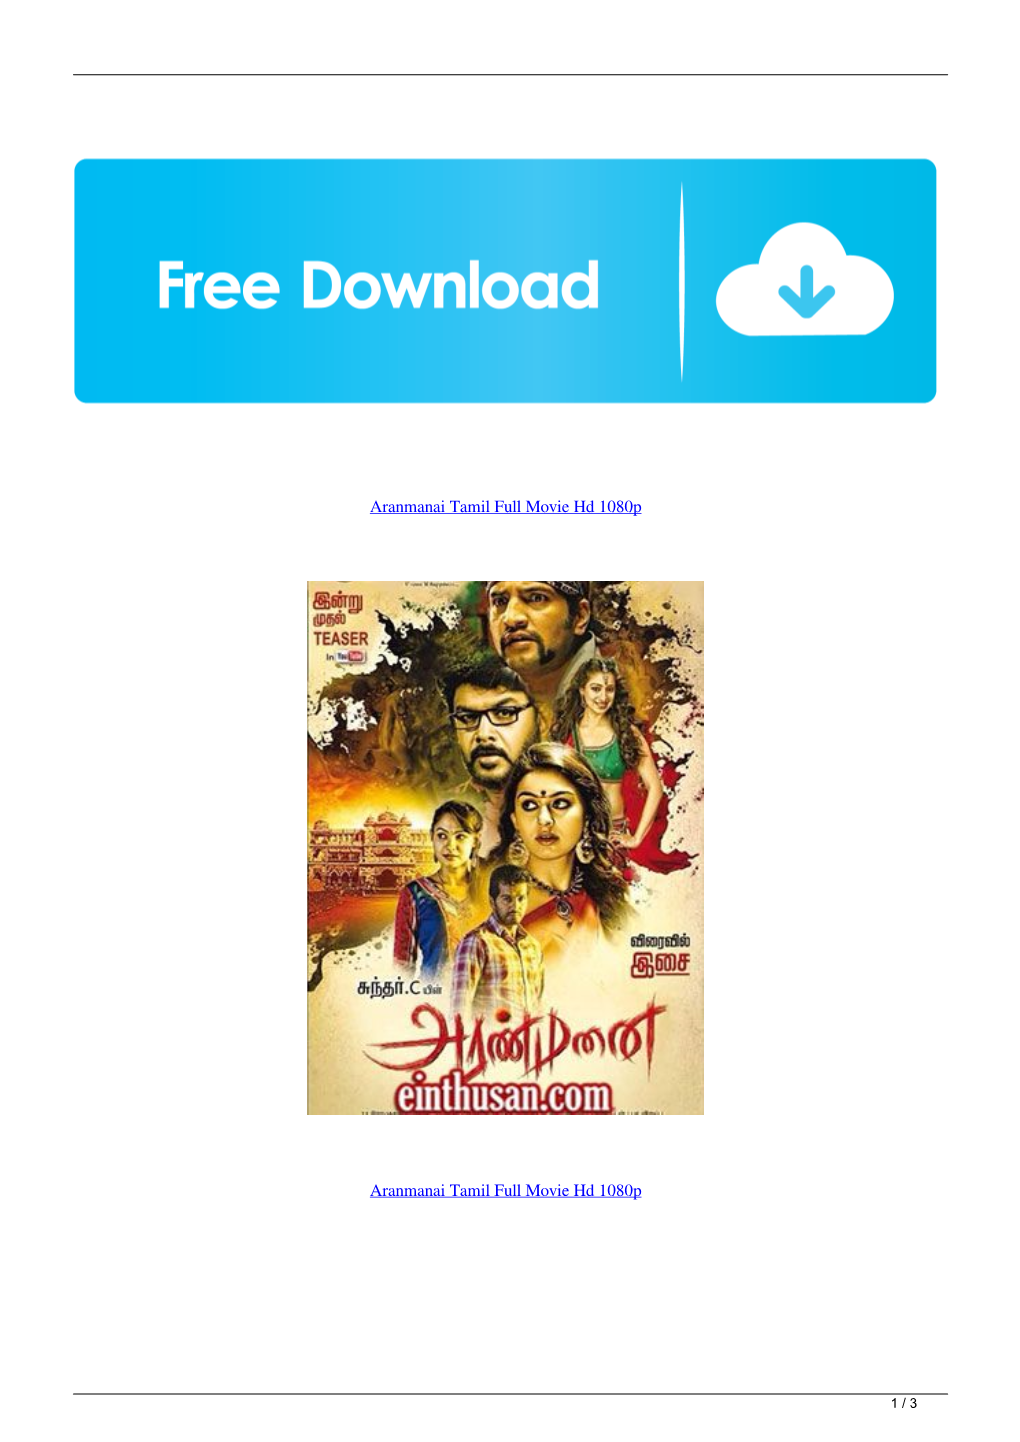 Aranmanai Tamil Full Movie Hd 1080P